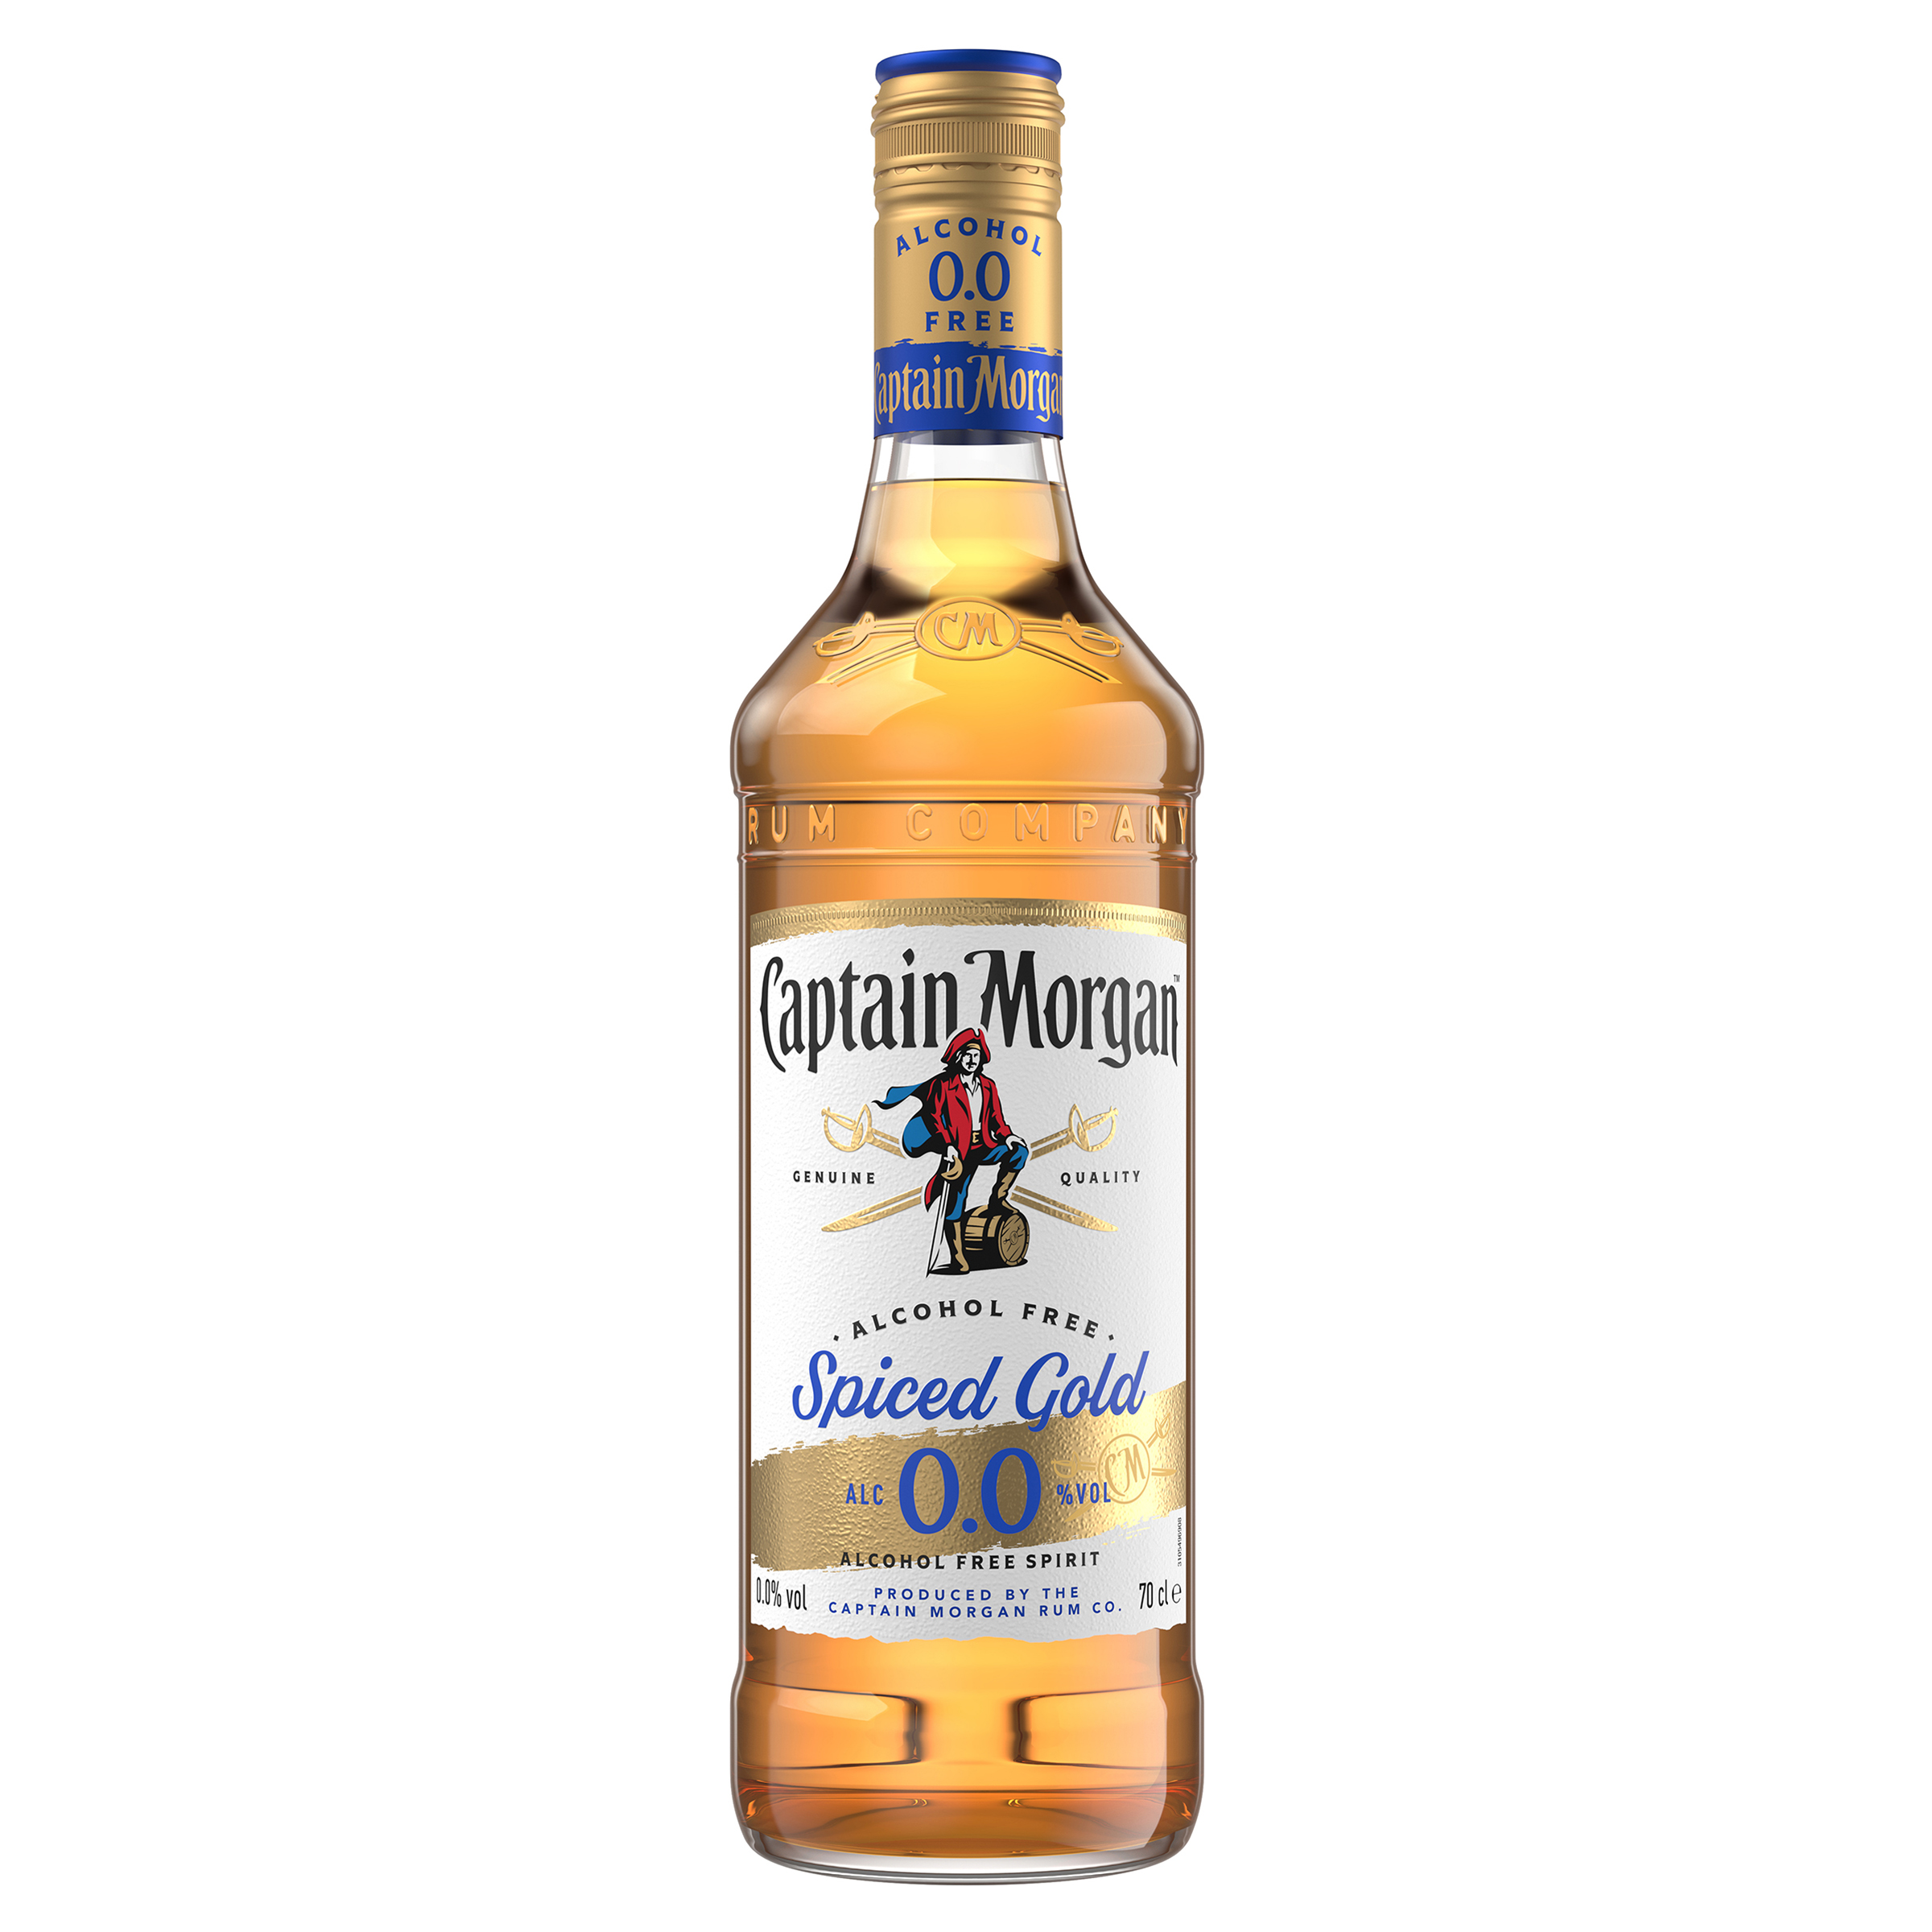 Captain Morgan Spiced Gold Alcohol Bar 0.0 | Free The 70cl Spirit